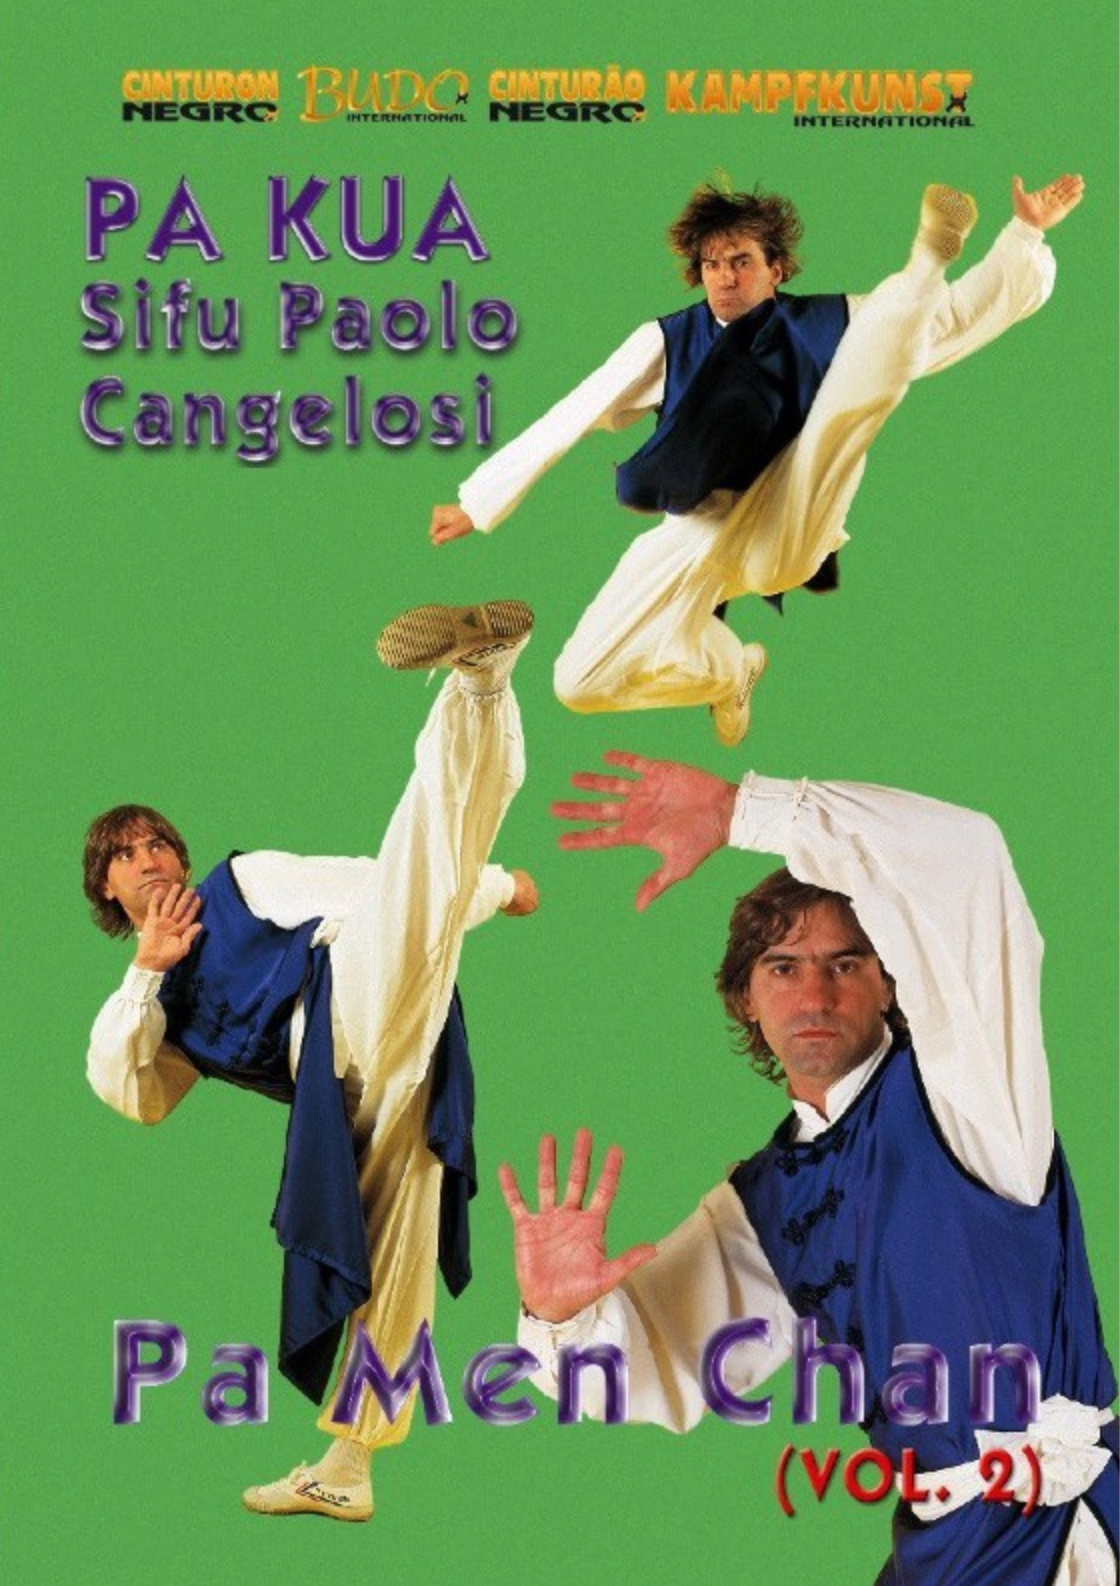 Kung Fu Pa Kua Pa Men Chan Form Vol 2 DVD with Paolo Cangelosi - Budovideos Inc